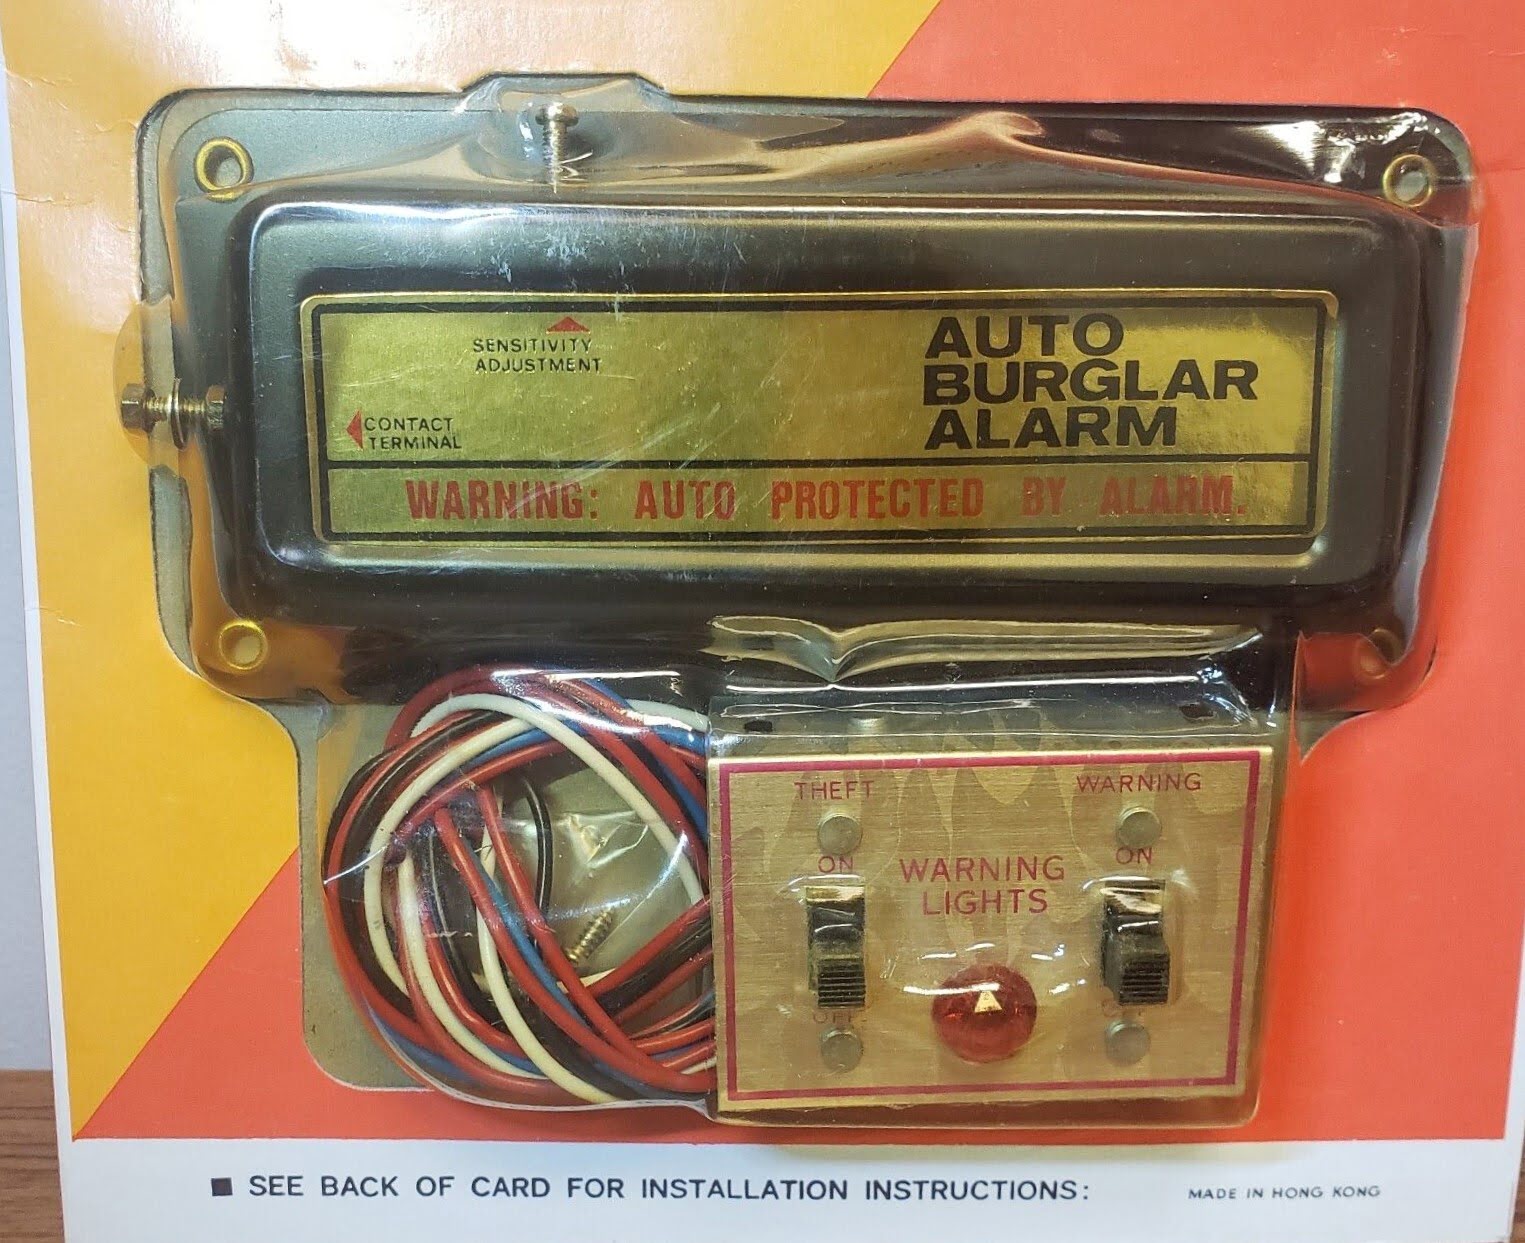 How To Hook Up Original Auto Burglar Alarm